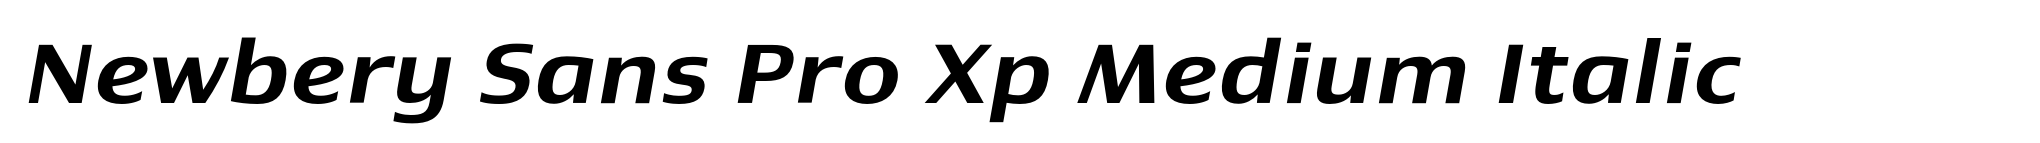 Newbery Sans Pro Xp Medium Italic image